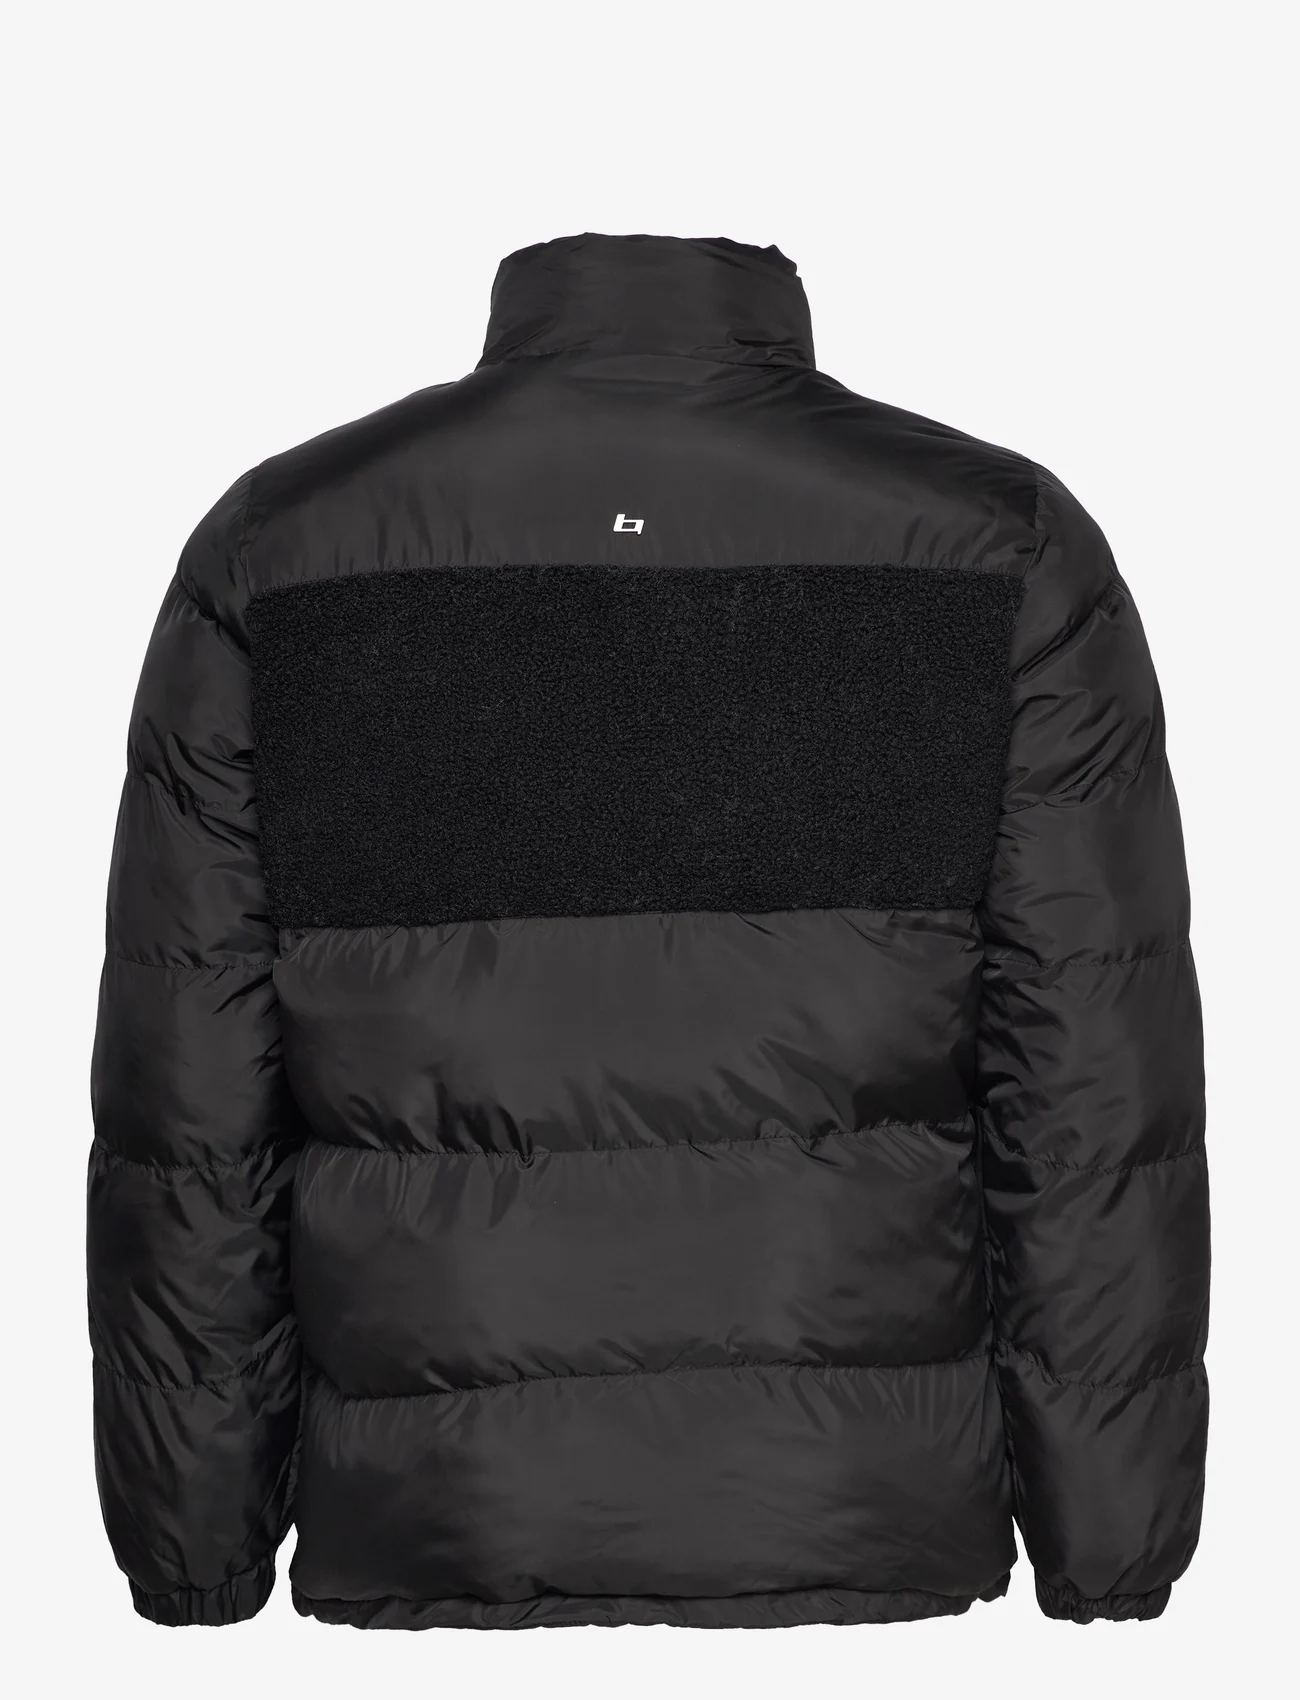 Blend - Outerwear - winterjassen - black - 1